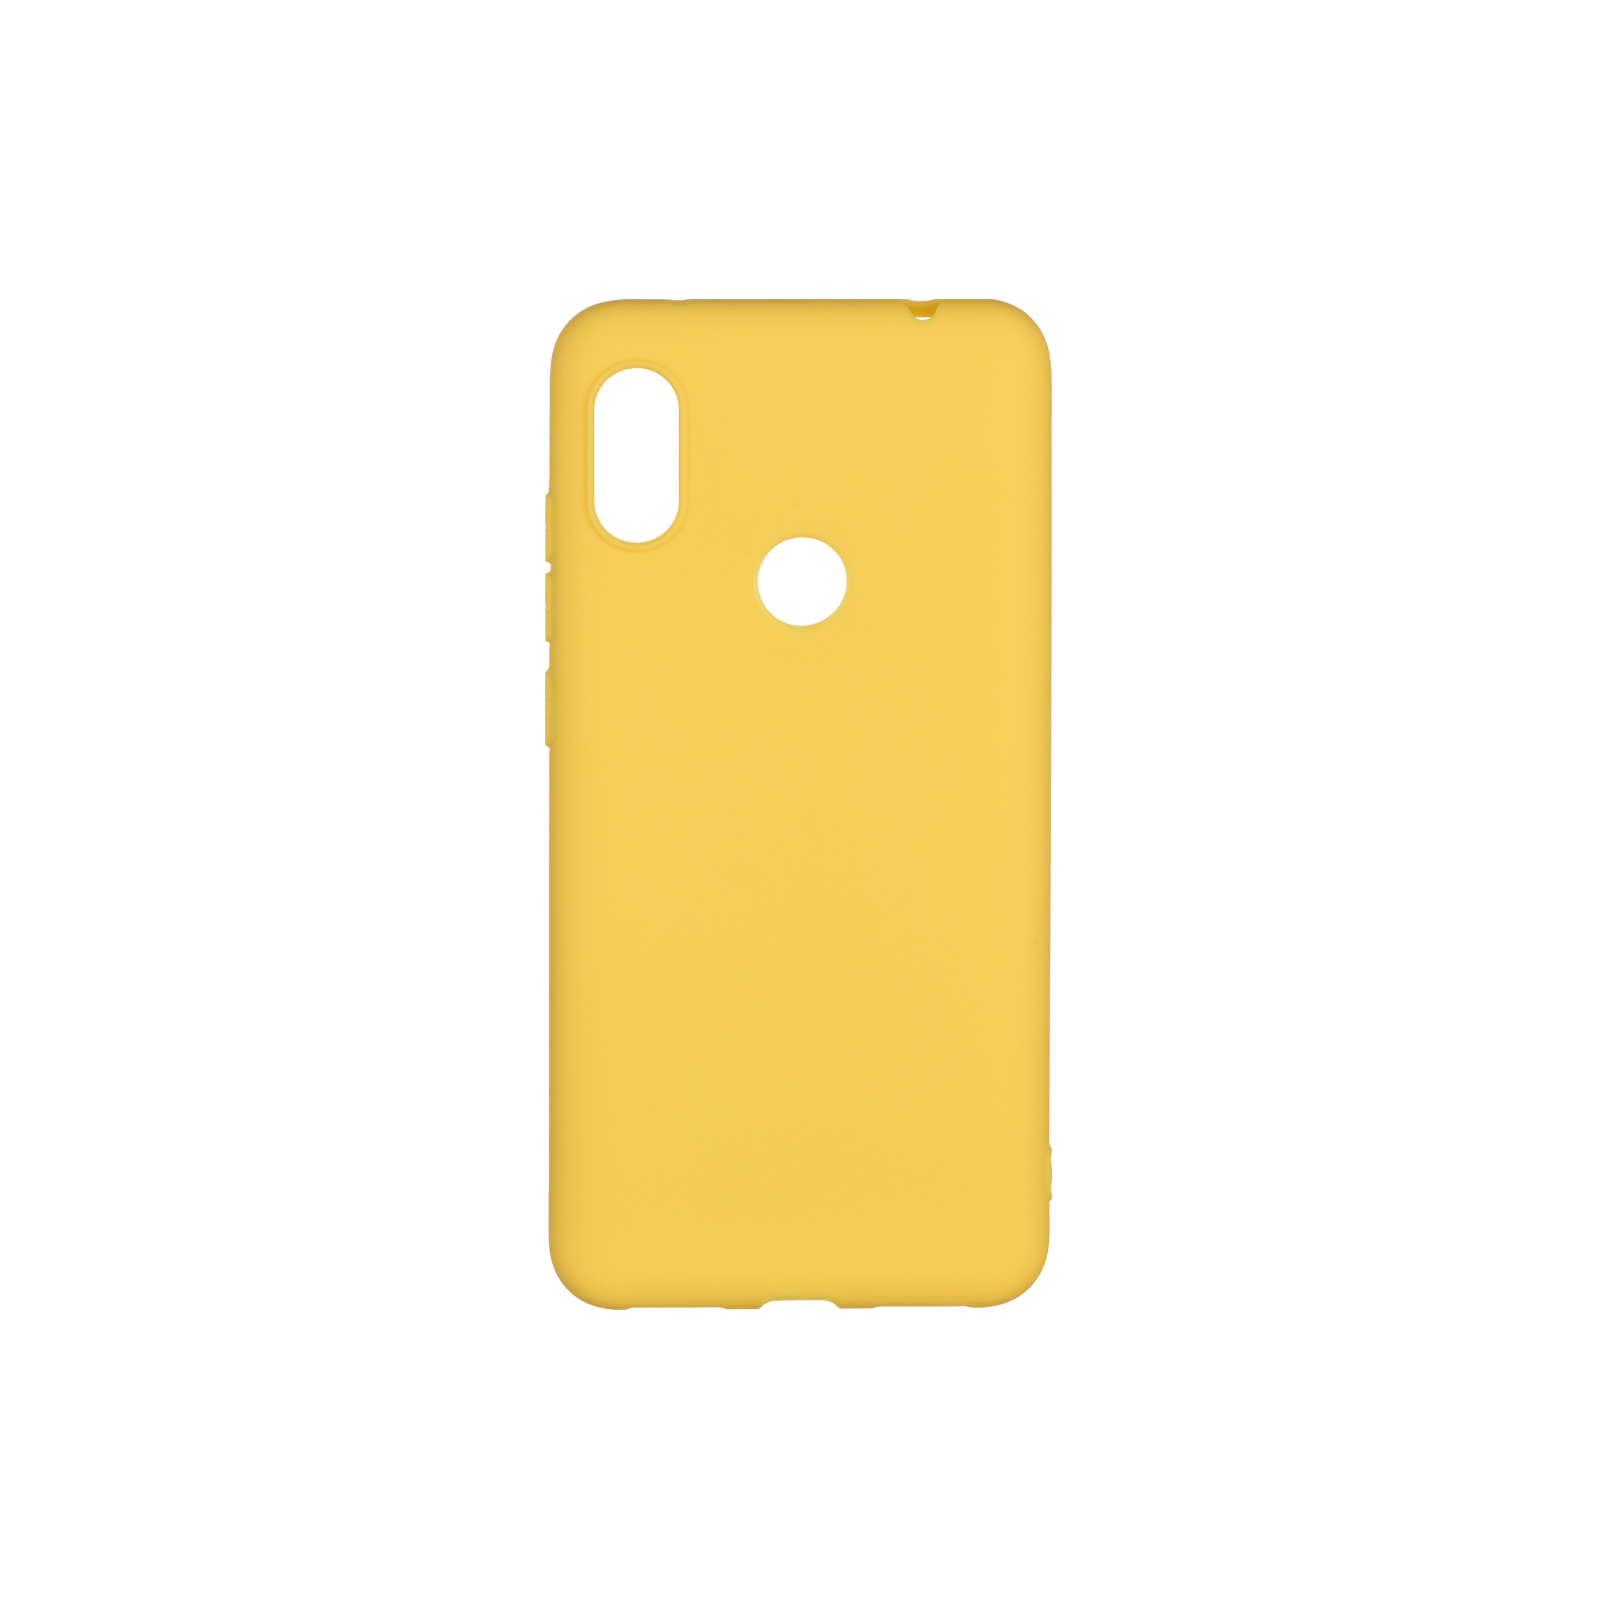 Чехол для мобильного телефона 2E Xiaomi Redmi Note 6 Pro, Soft touch, Mustard (2E-MI-N6PR-NKST-MS)